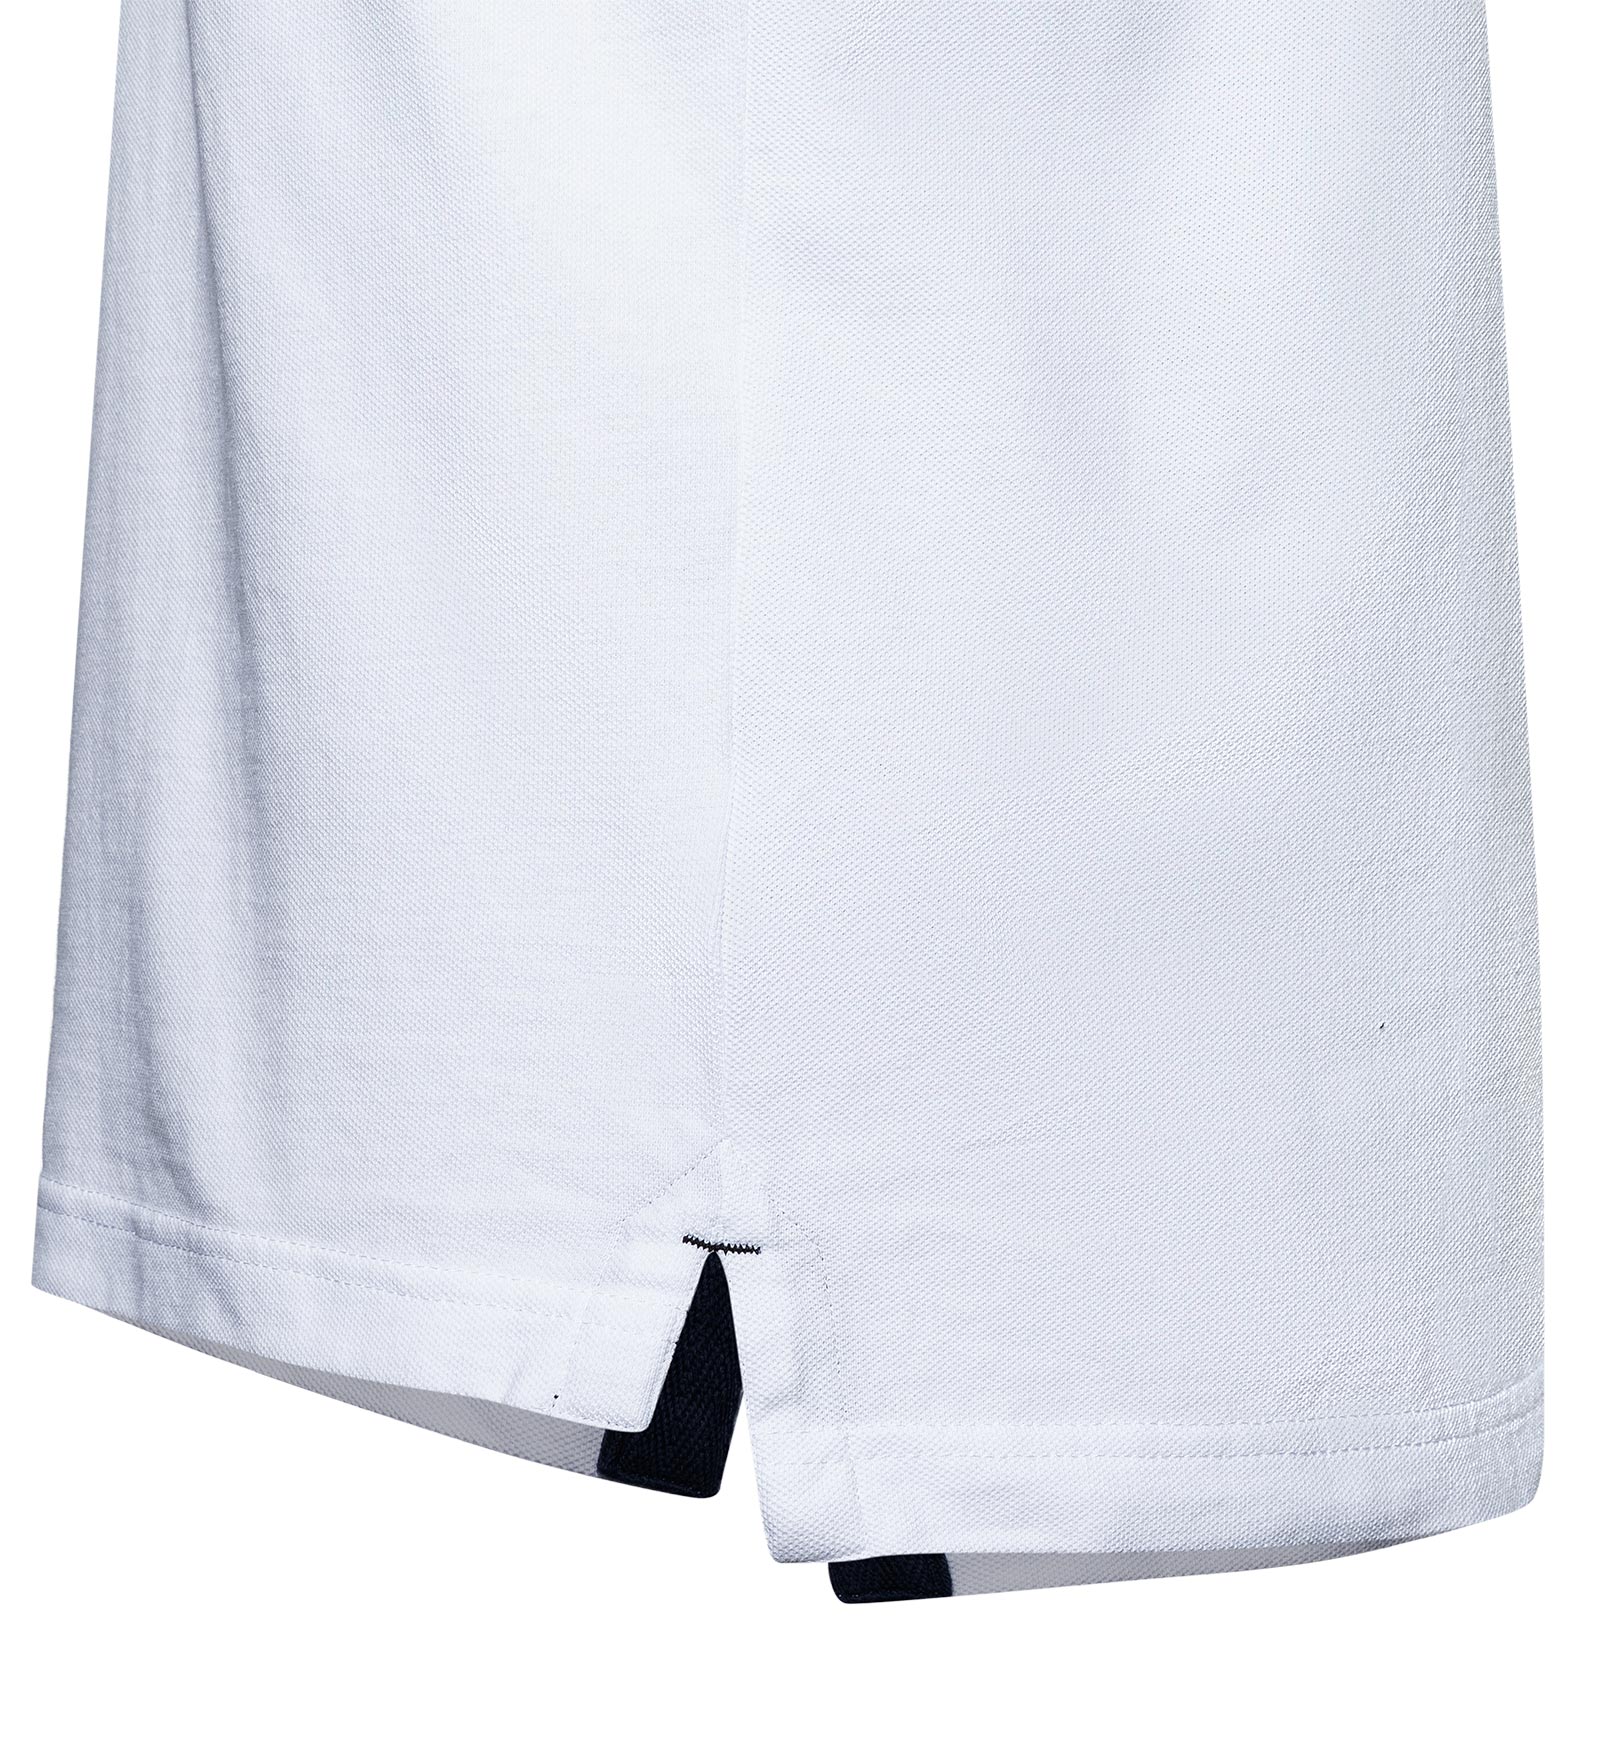 Tennis tail of a white polo shirt